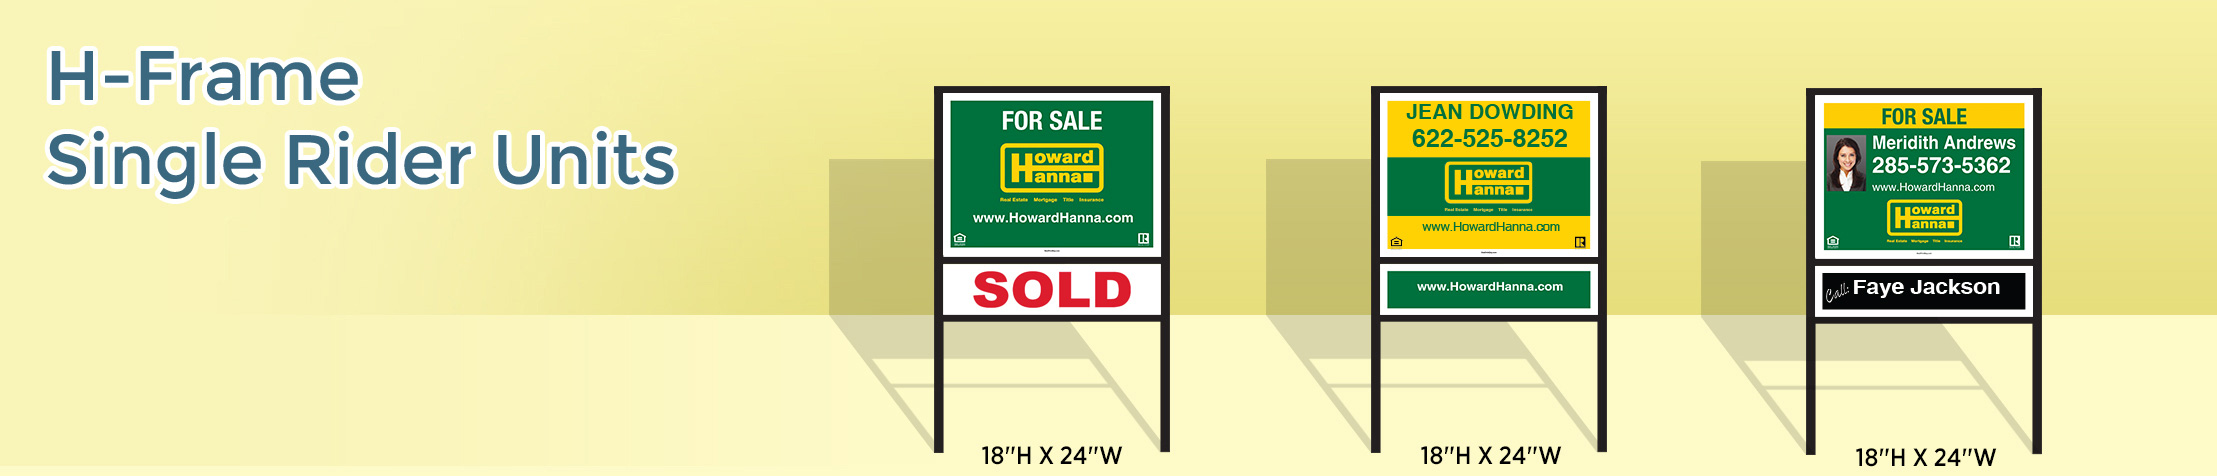 Howard Hanna Real Estate H-Frame Single Rider Units - Howard Hanna real estate signs | BestPrintBuy.com